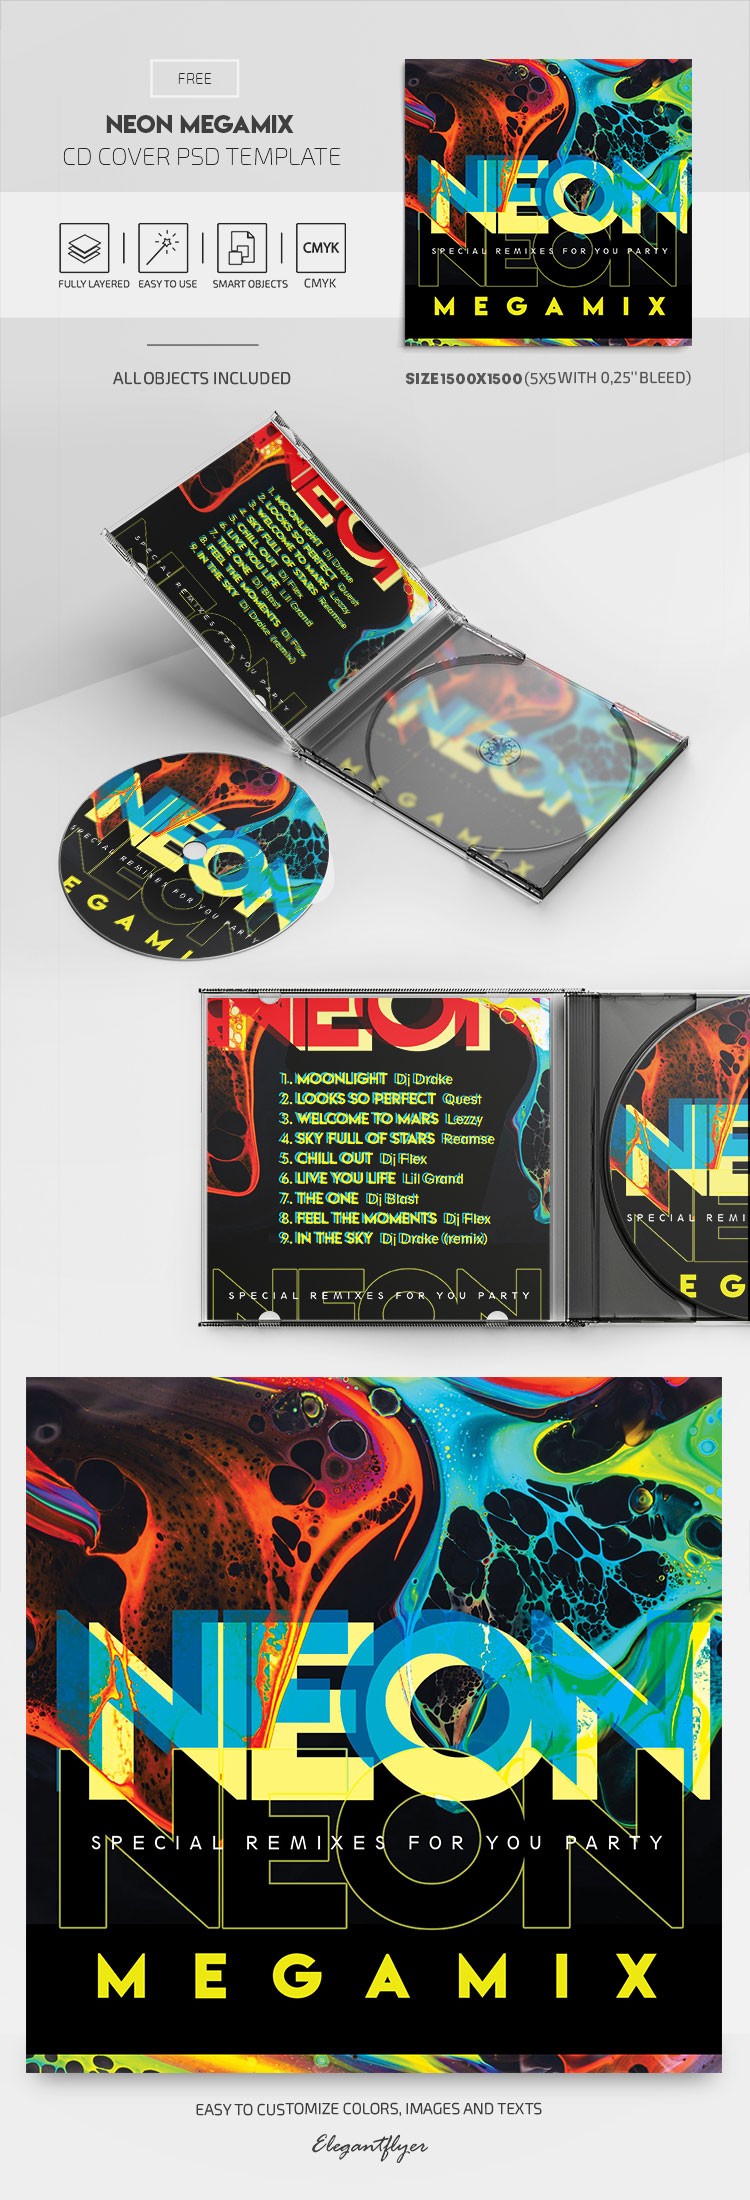 Neon Megamix CD Cover by ElegantFlyer